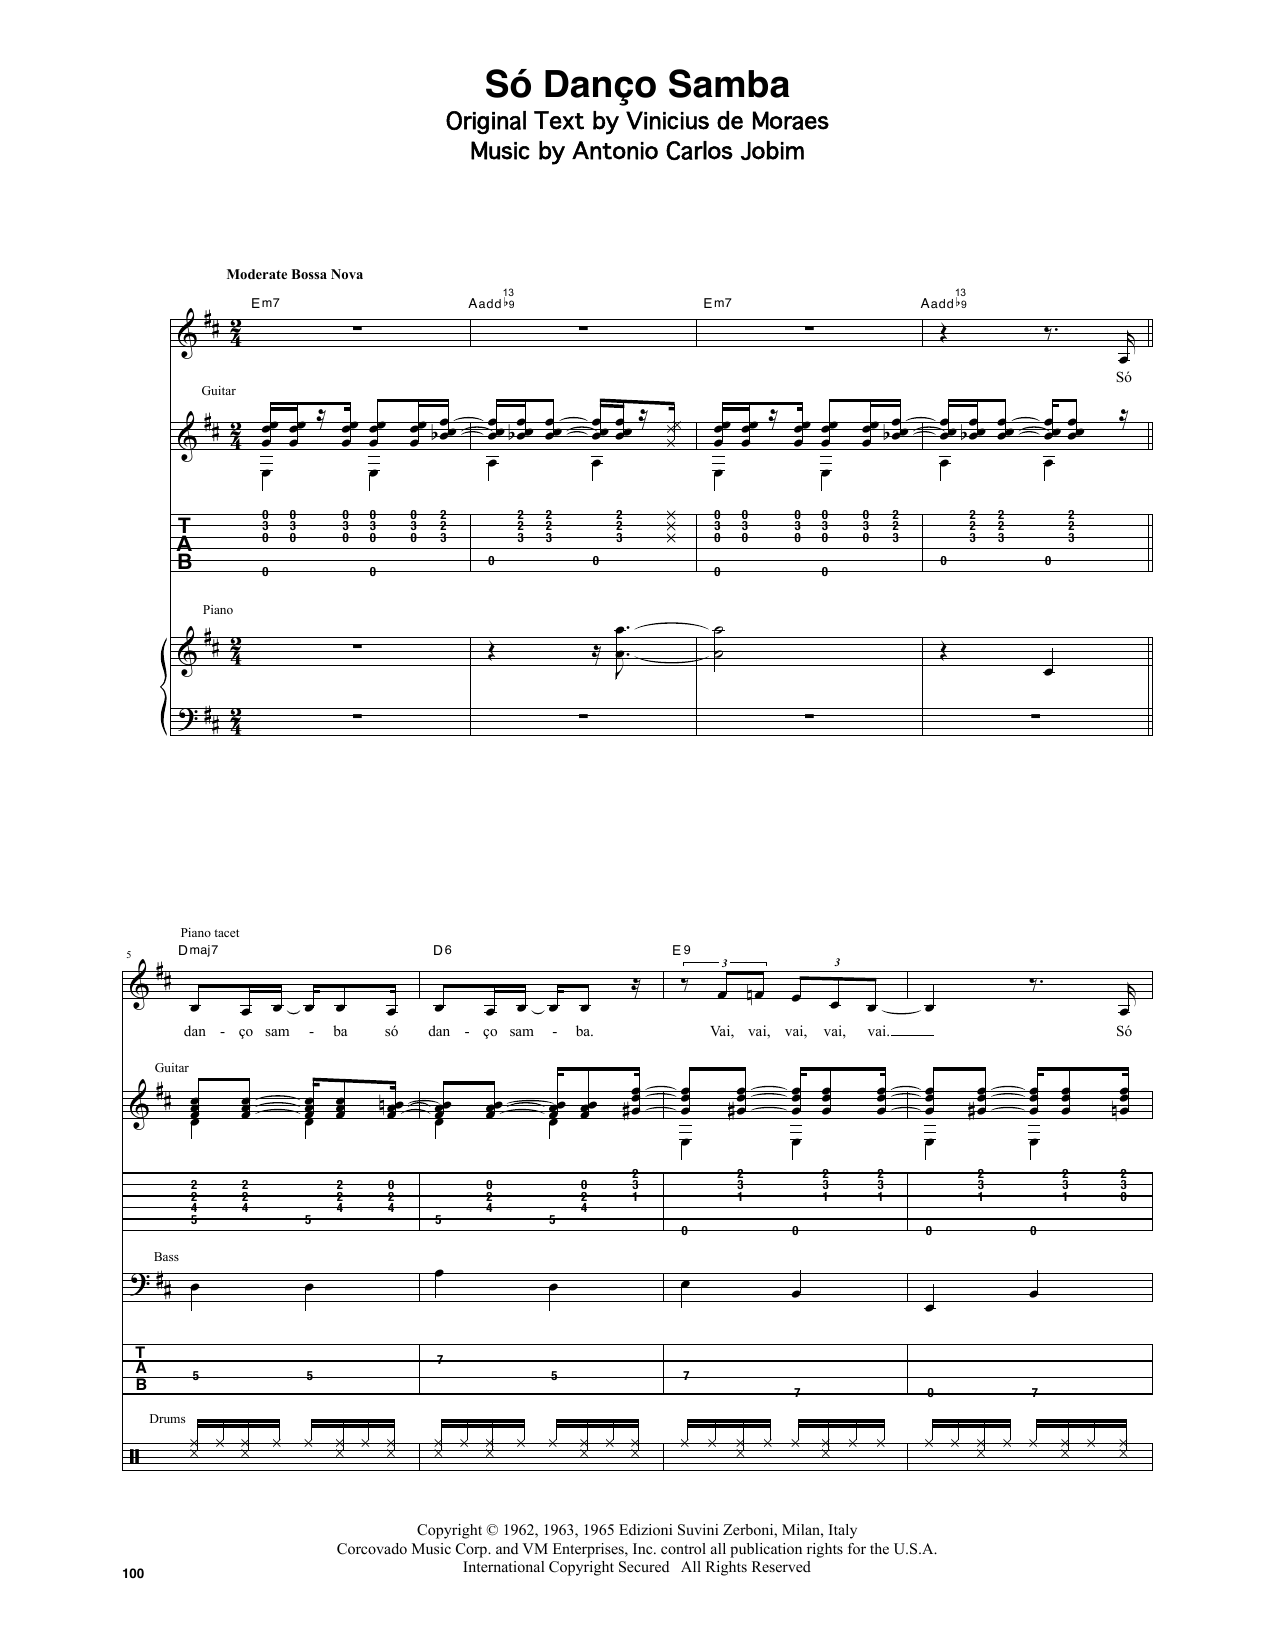 Stan Getz & João Gilberto Jazz 'N' Samba (So Danco Samba) Sheet Music Notes & Chords for Transcribed Score - Download or Print PDF